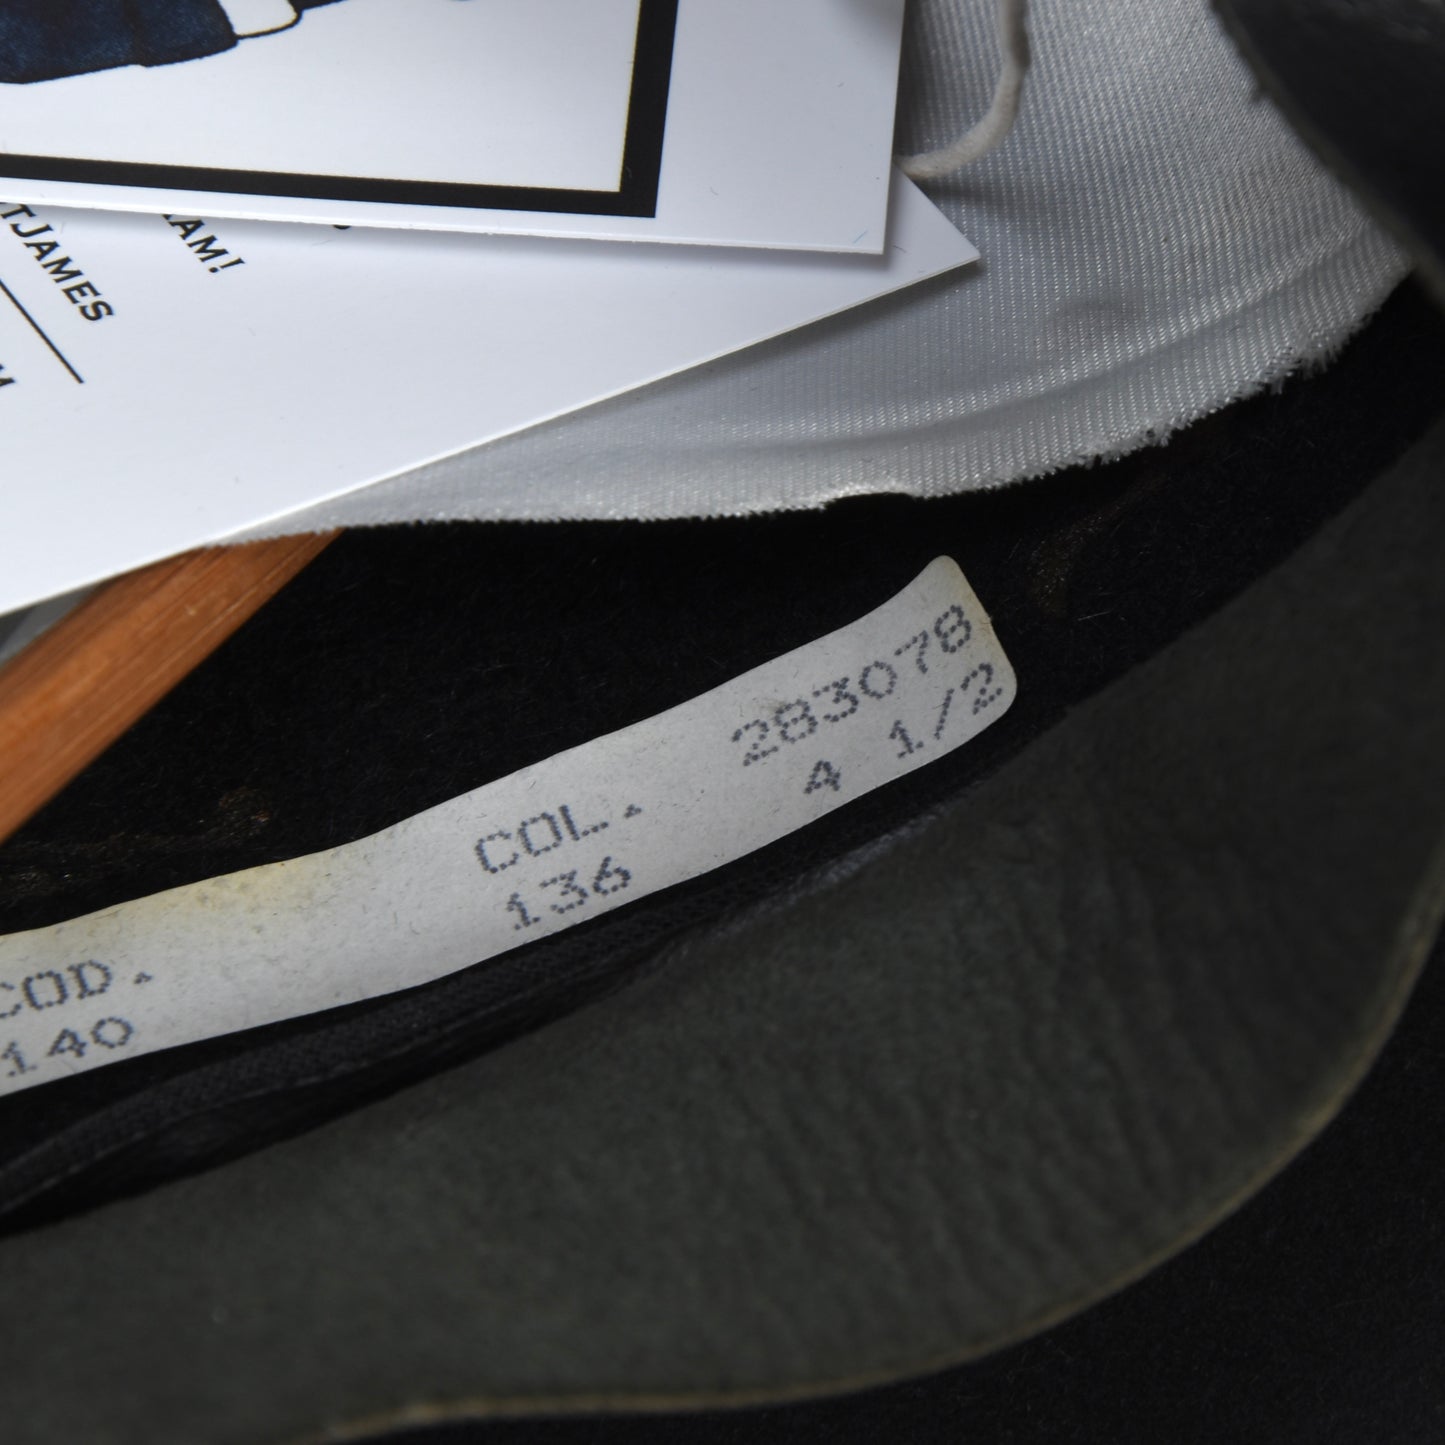 Borsalino Fur Felt Fedora Hat Size Punti 4 1/2 ca. 56 - Black